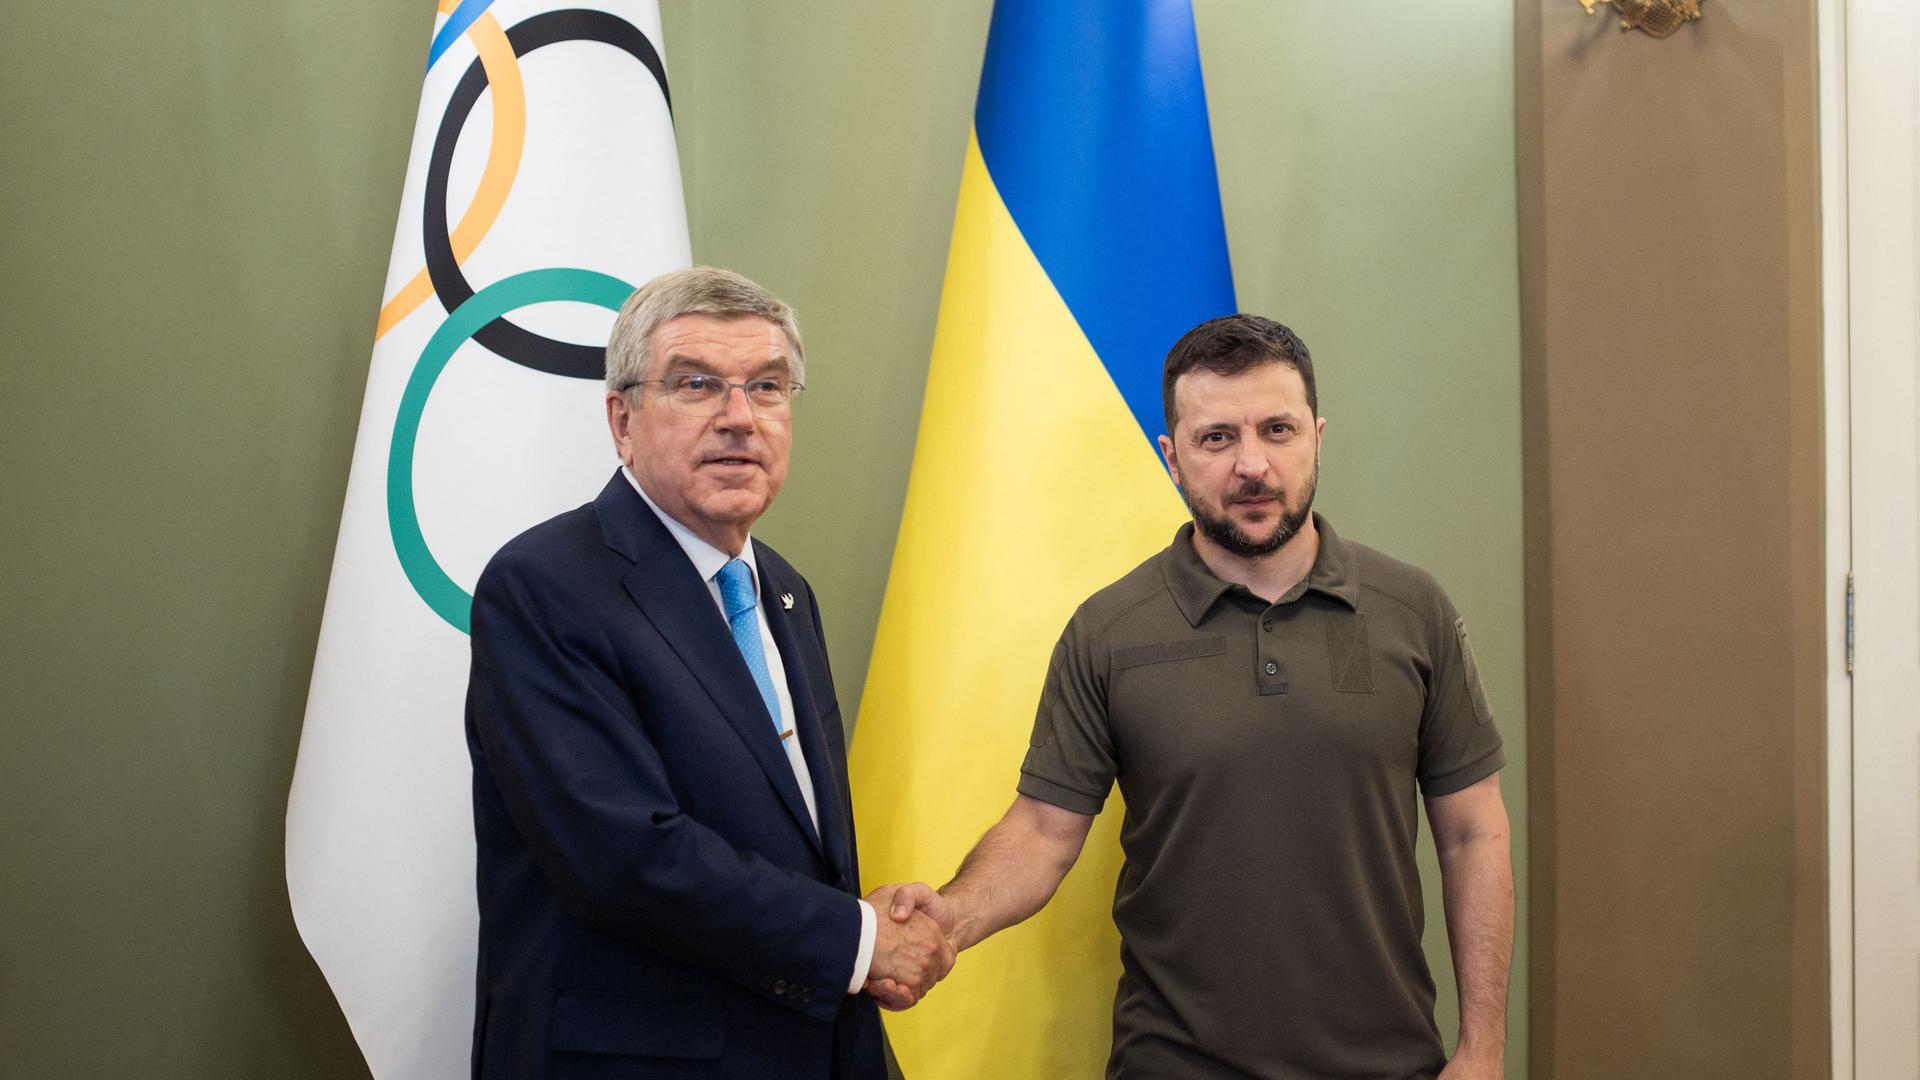 IOC-Präsident Thomas Bach trifft sich mit Ukraine-Präsident Volodymyr Zelenskyy.